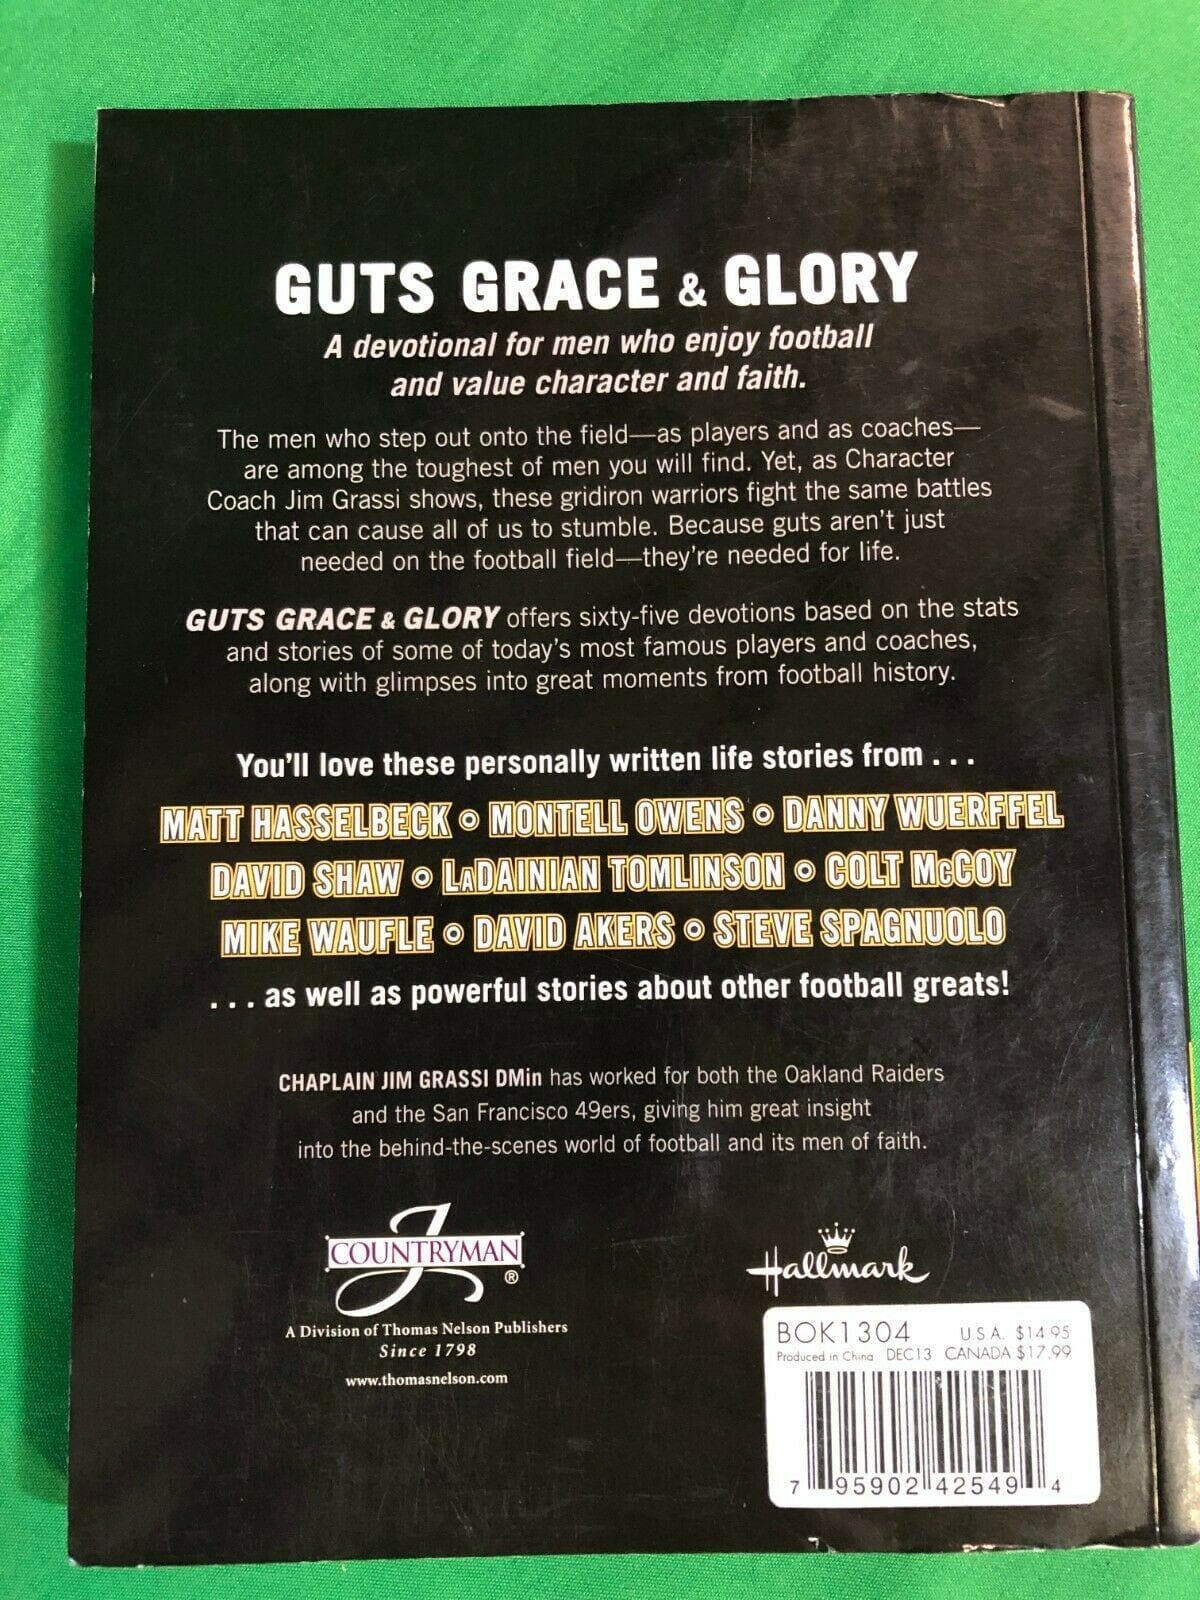 American Football "Guts Grace & Glory" Devotional Book